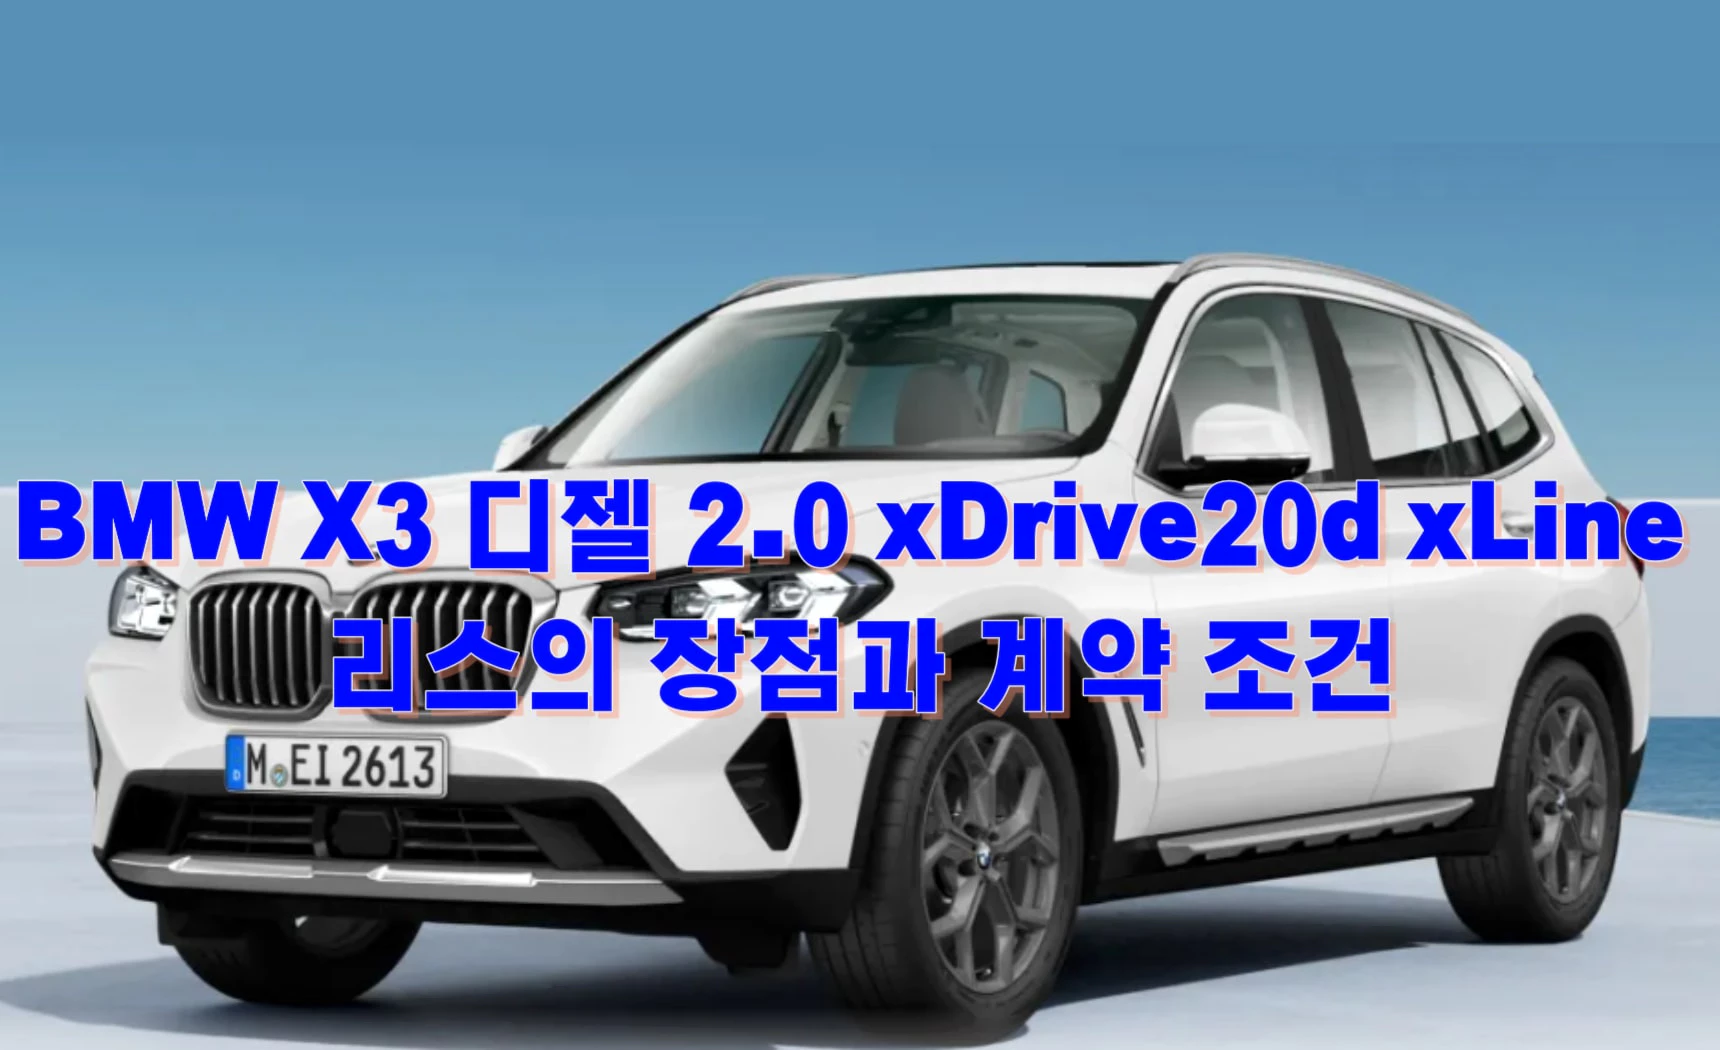 BMW X3 디젤 2.0 xDrive20d xLine 리스의 장점과 계약 조건